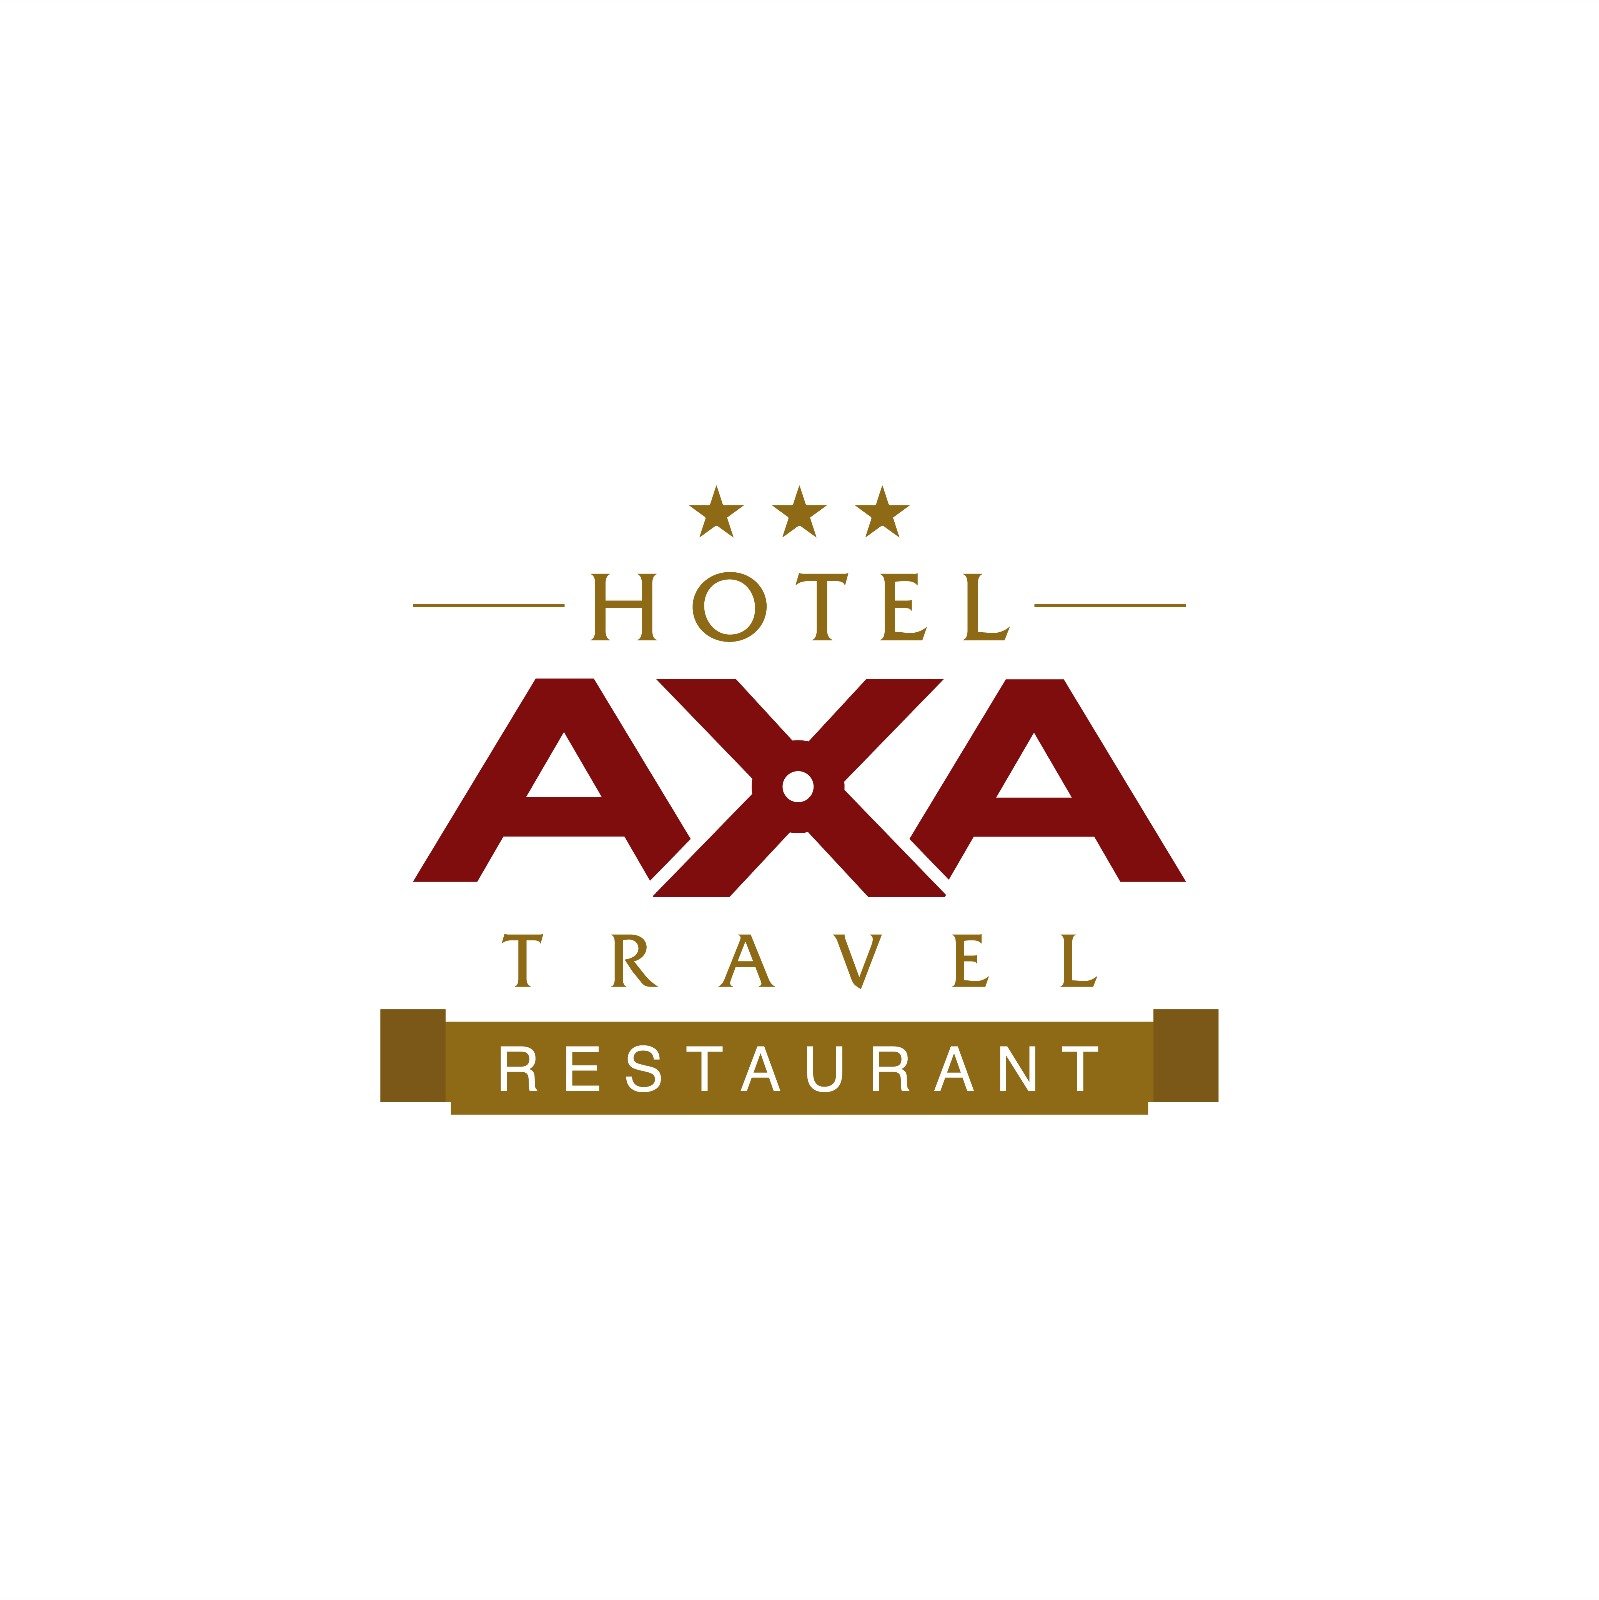 HOTEL AXA TRAVEL